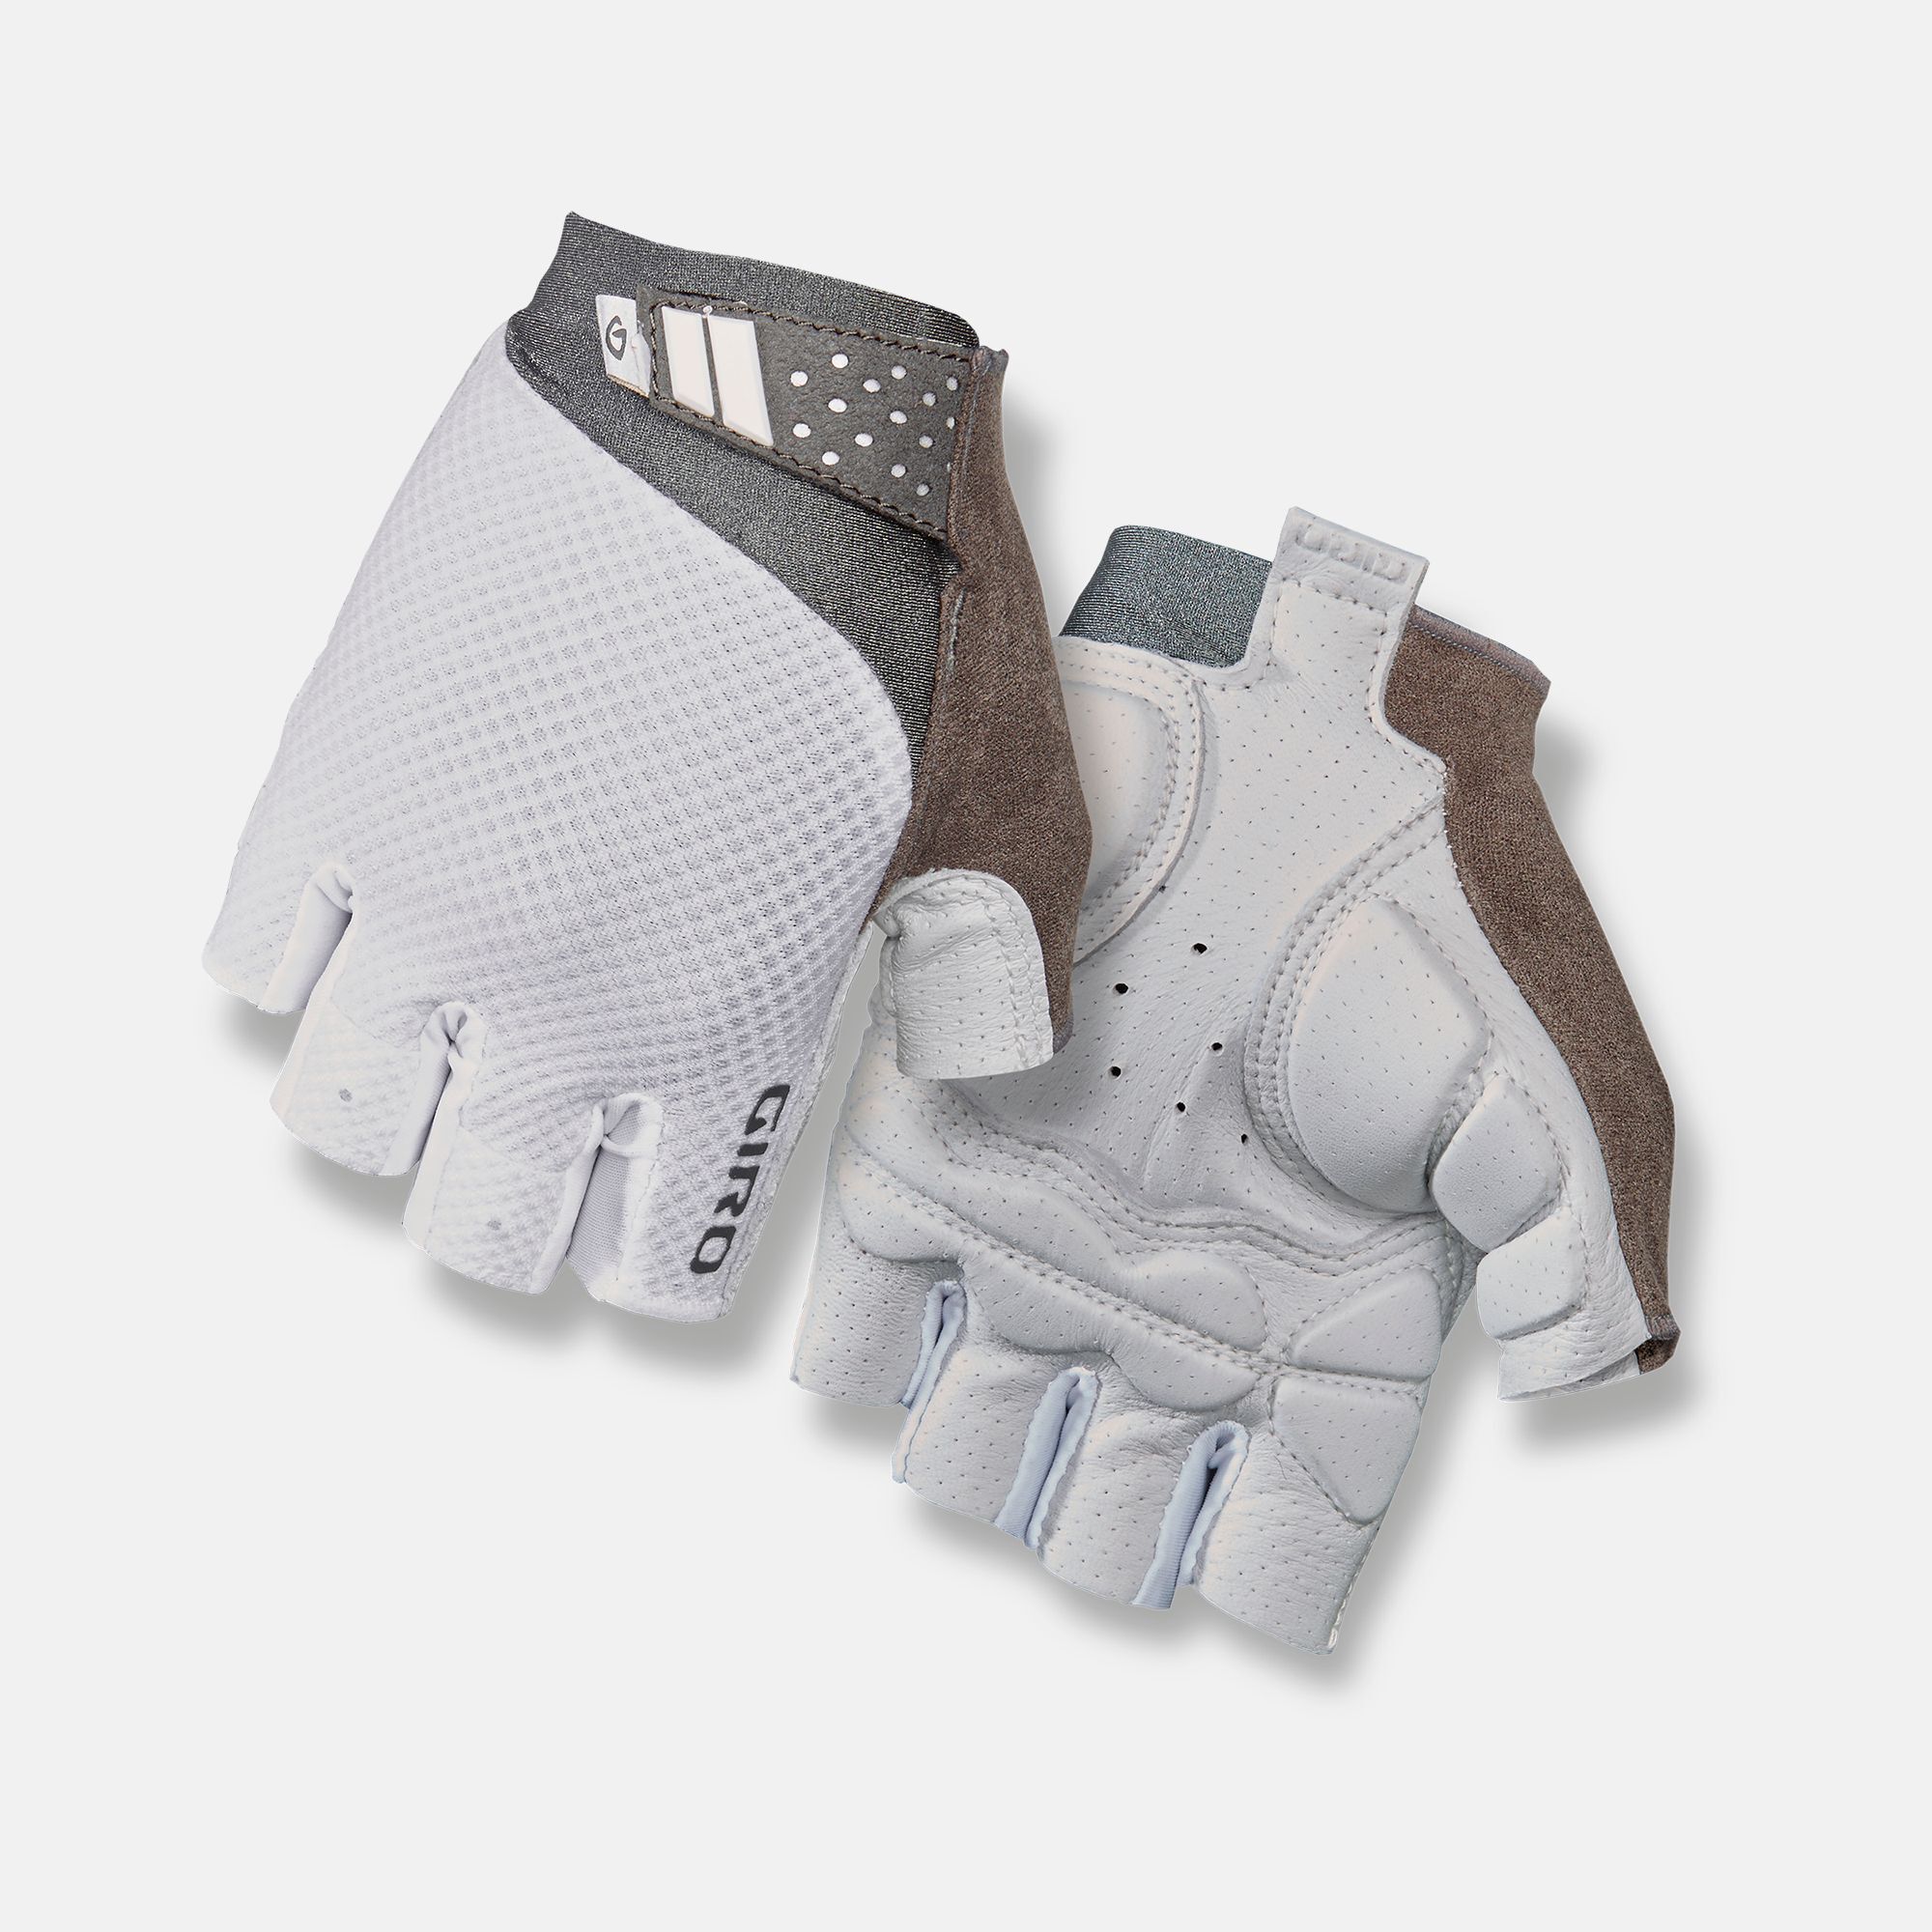 Sale Bike Gloves | Giro